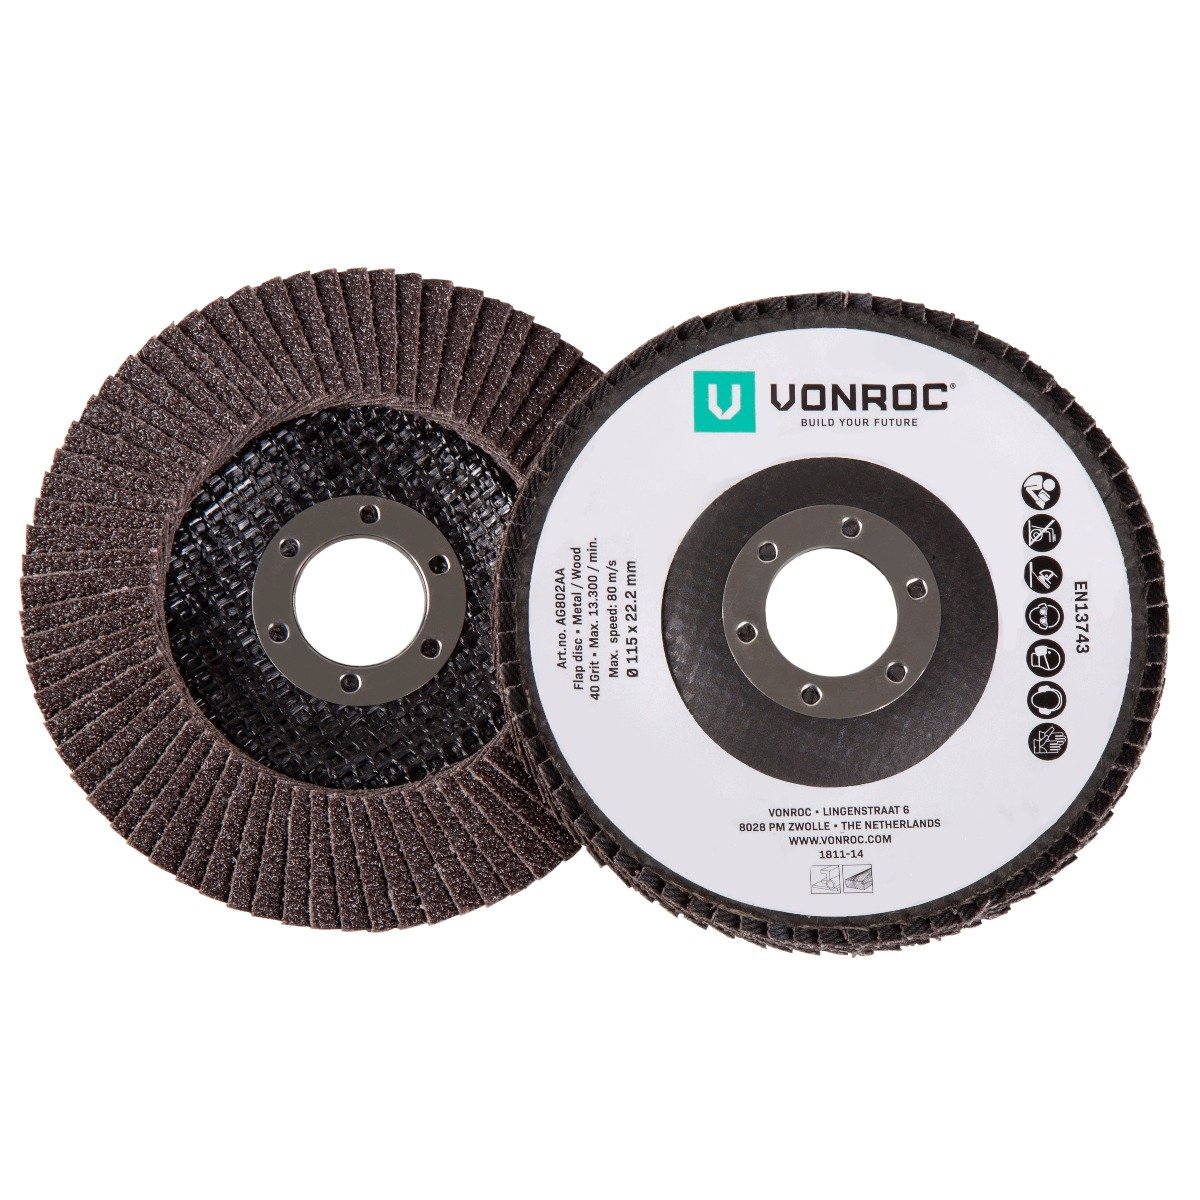 VONROC Set di 2 dischi abrasivi lamellari universali, G40 e G60, Diametro Ø  115 x 22,2 mm. Per smerigliatrici angolari